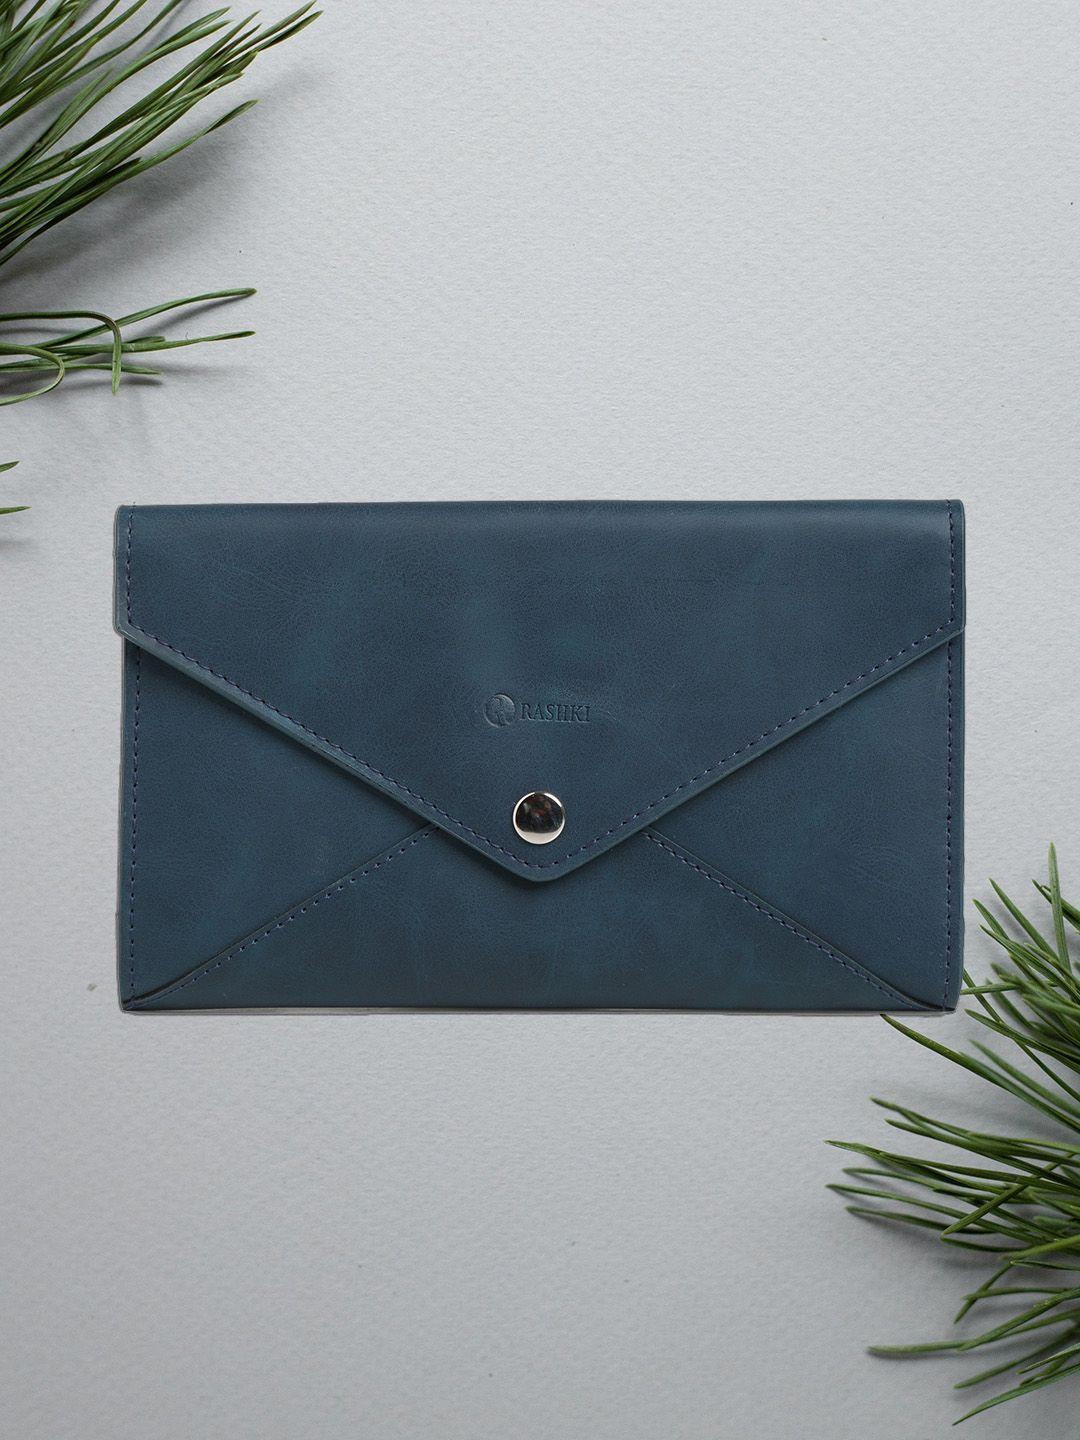 rashki blue textured envelope vegan leather sustainable clutch